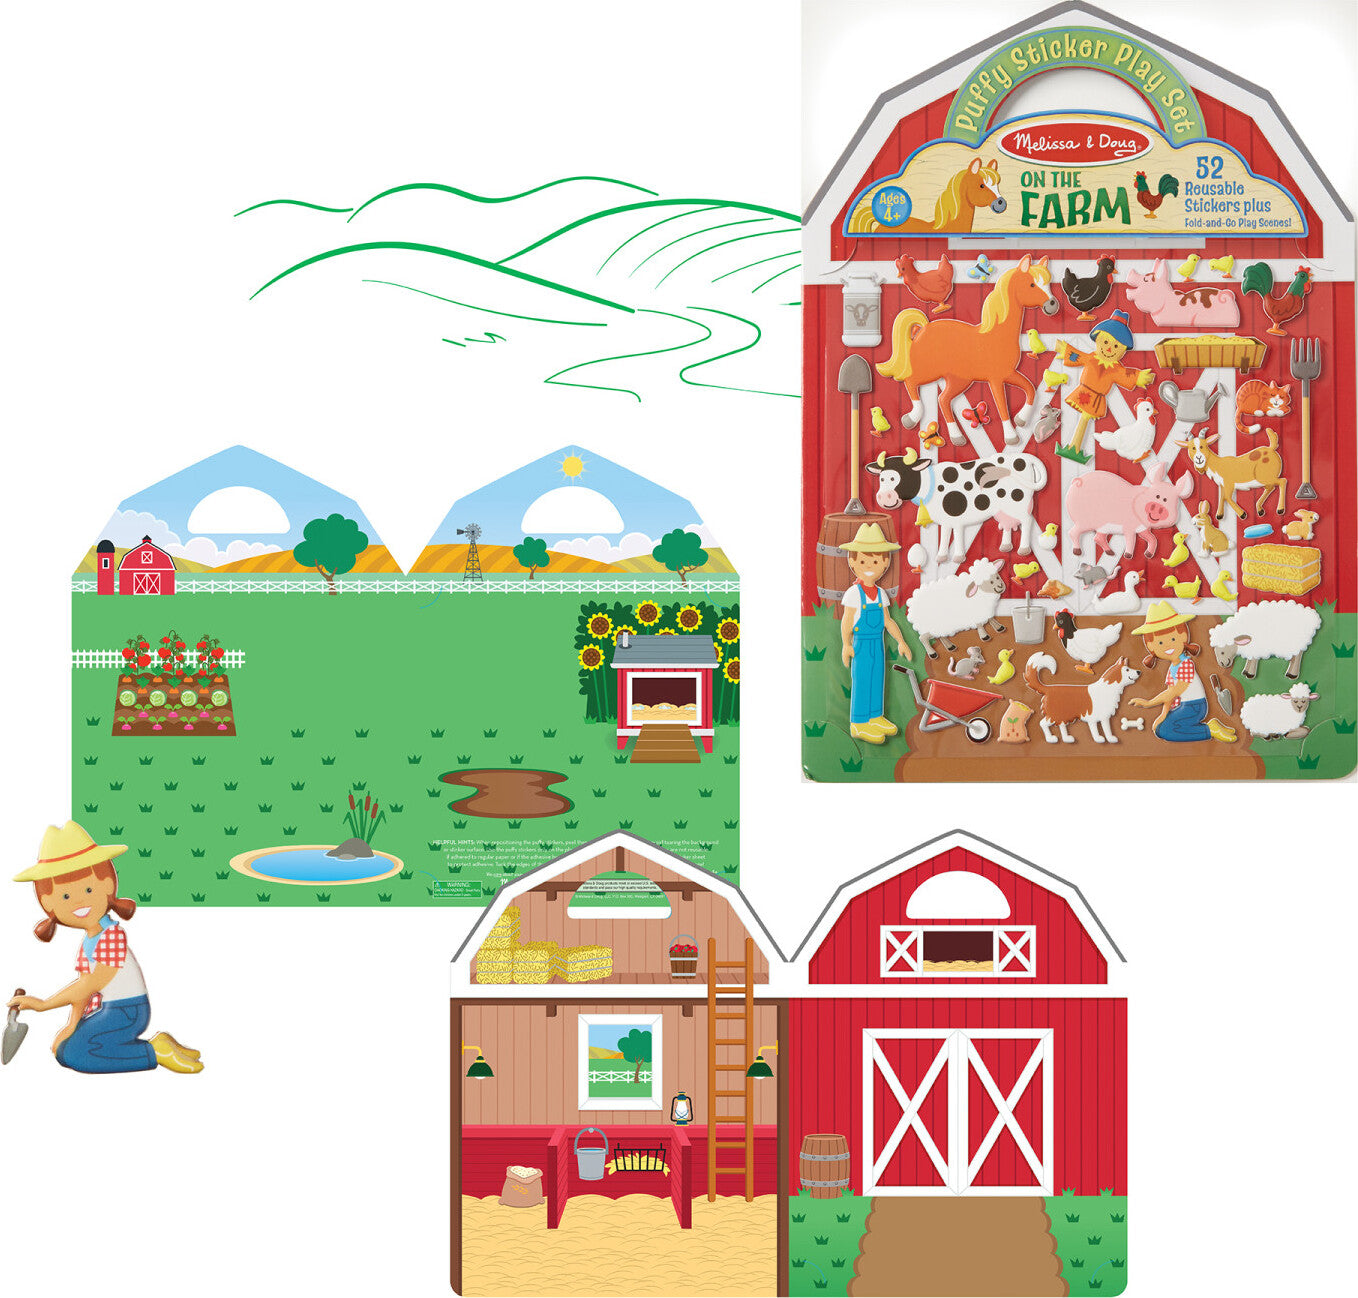 Puffy Sticker Play Set - On the Farm